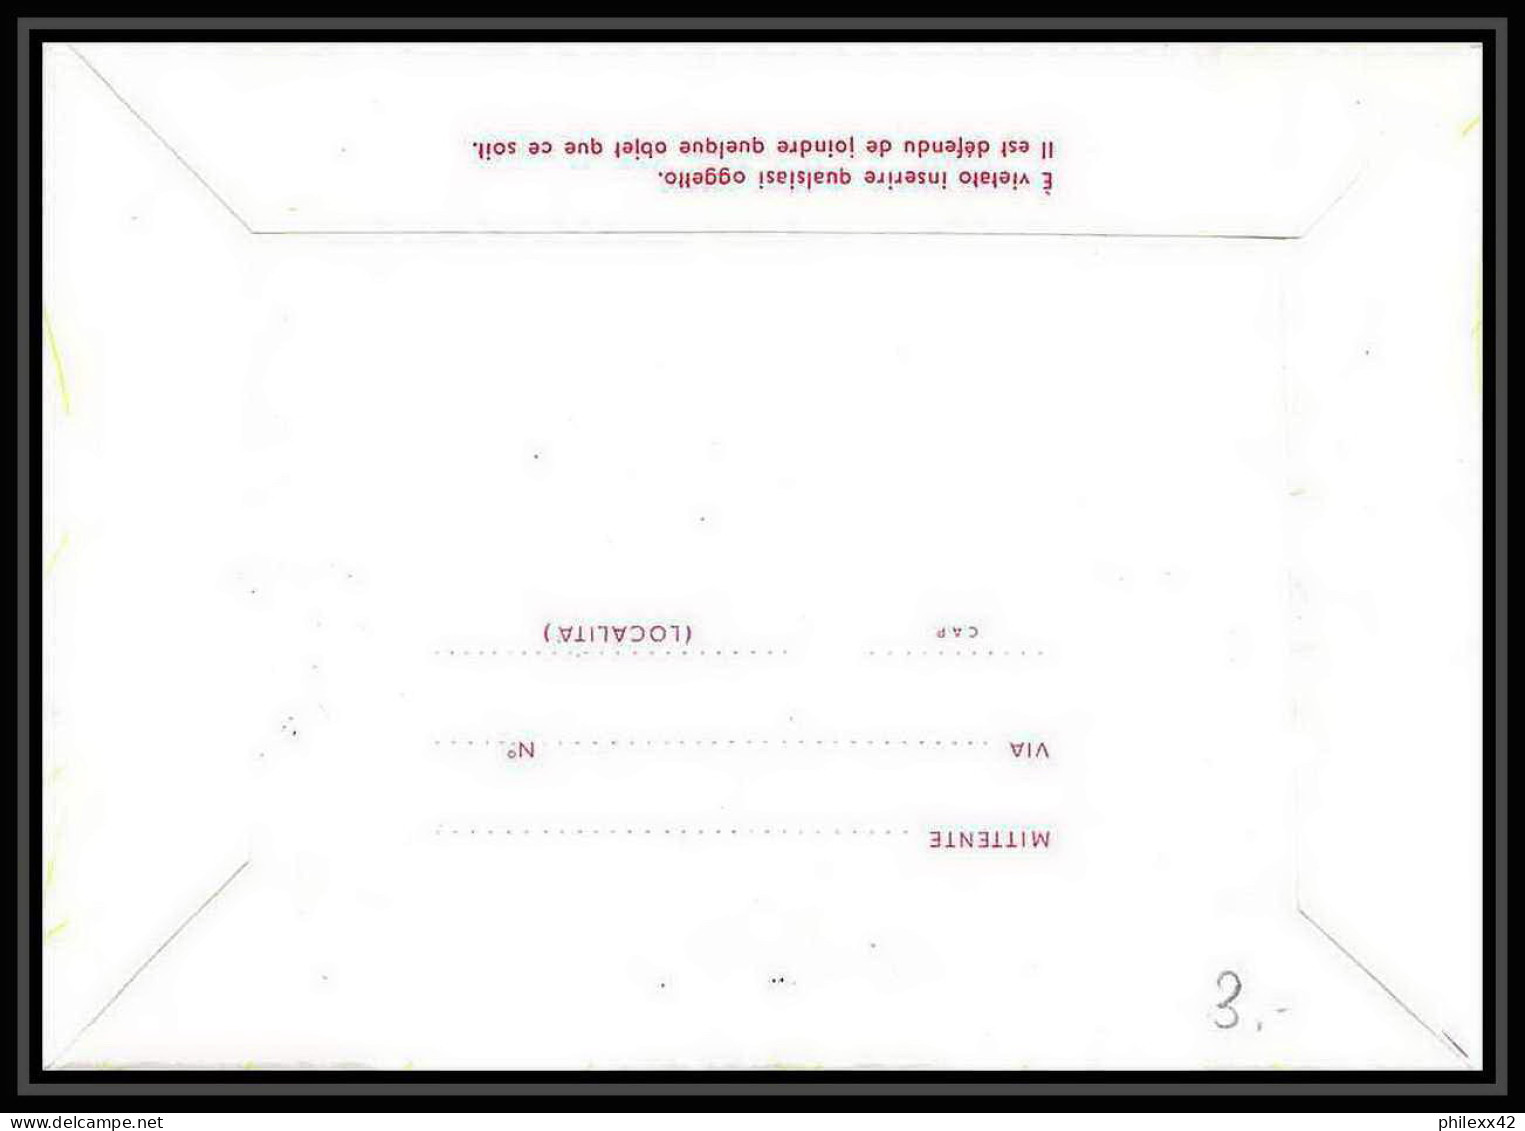 7886/ Espace (space Raumfahrt) Entier Postal Aerogramme (Stamped Stationery) 26/8/1977 Satellite Sirio Italie (italy) - Afrique